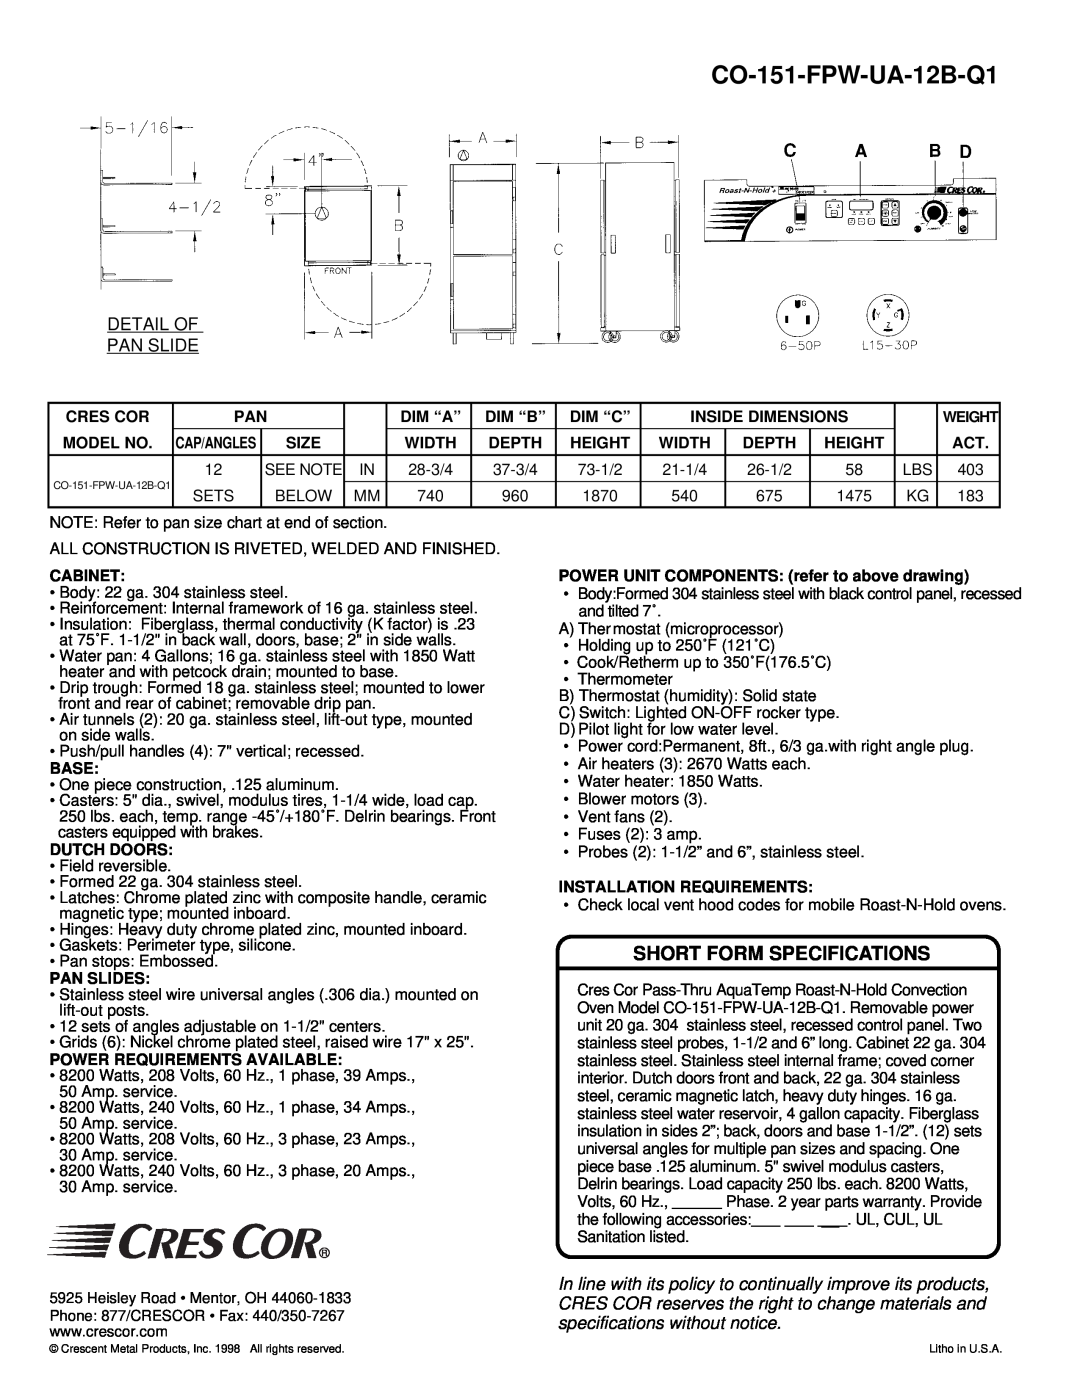 Cres Cor CO-151-FPW-UA-12B-Q1 manual Short Form Specifications 